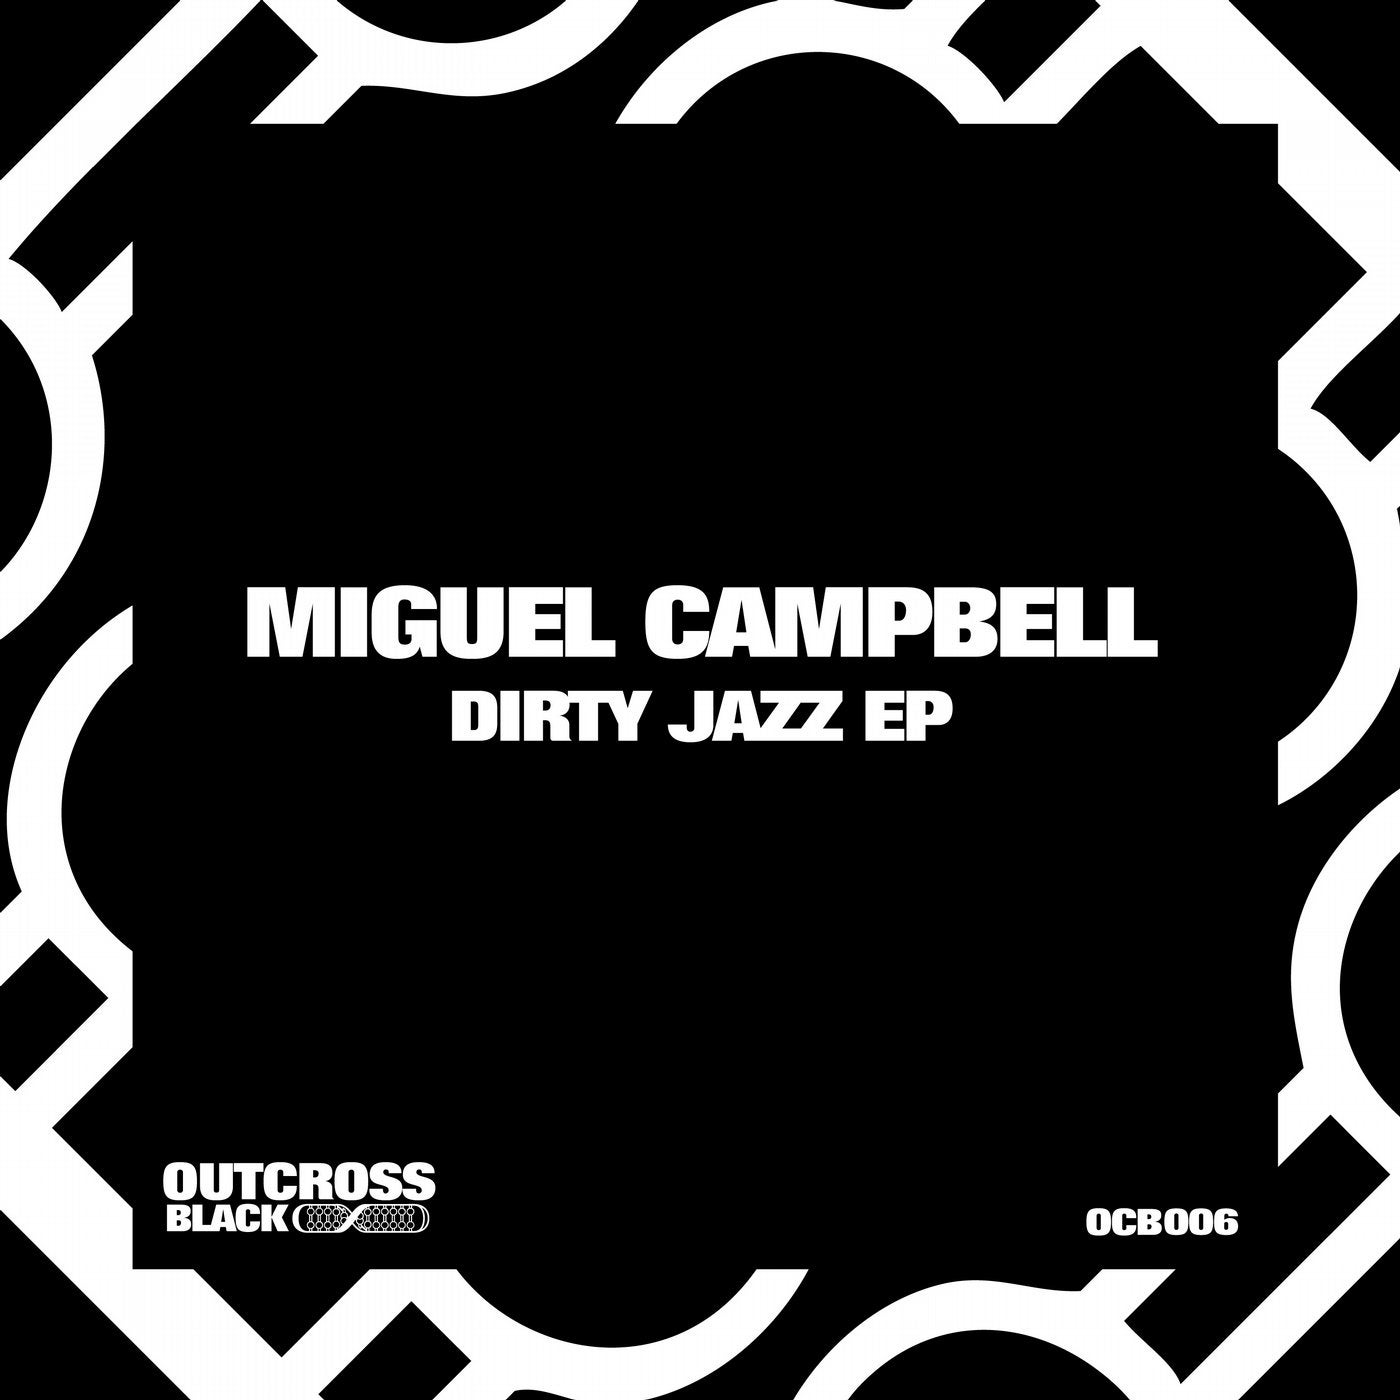 Dirty Jazz EP